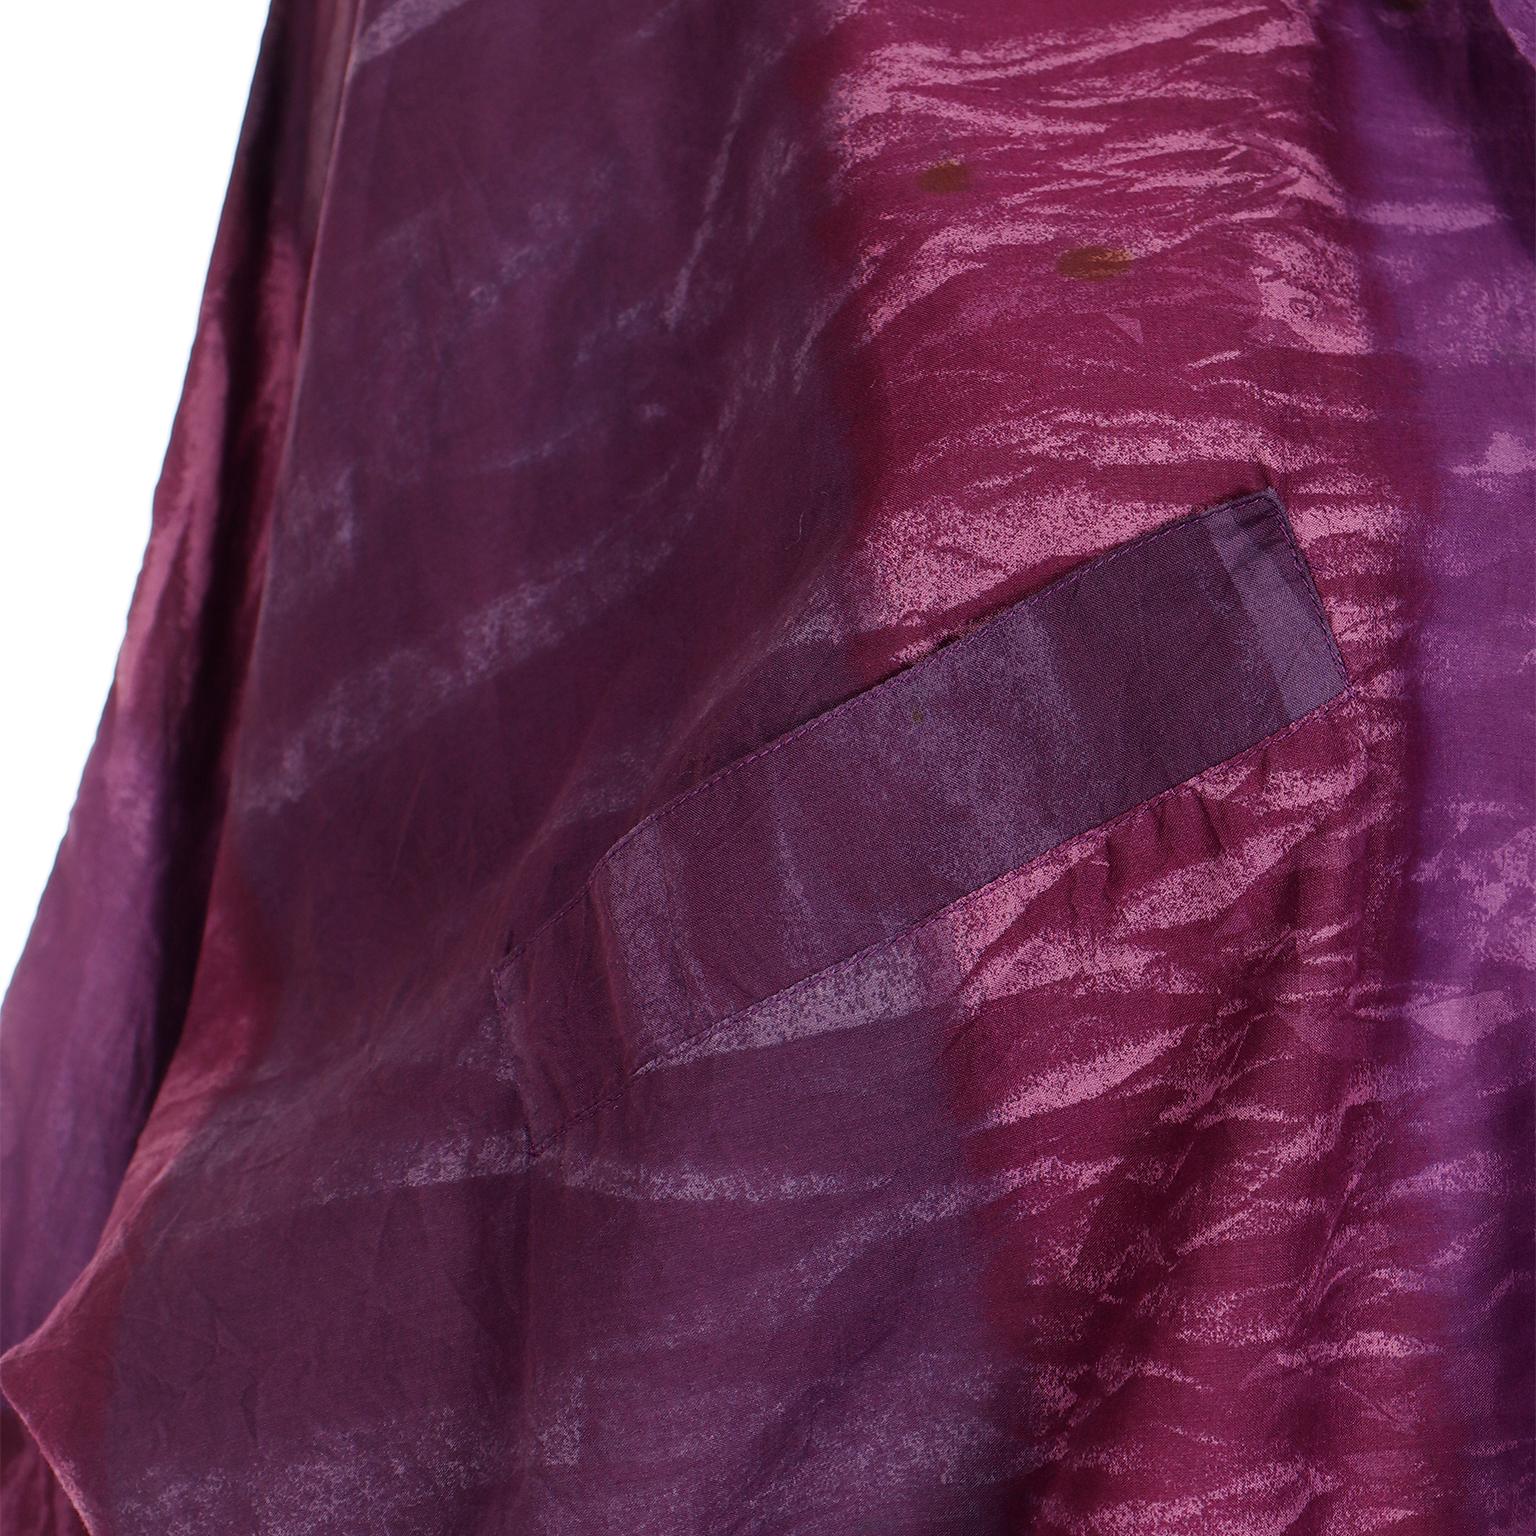 Gianni Versace 1980s Asymmetrical Top Purple Abstract Print Shirt w Knit Trim For Sale 3